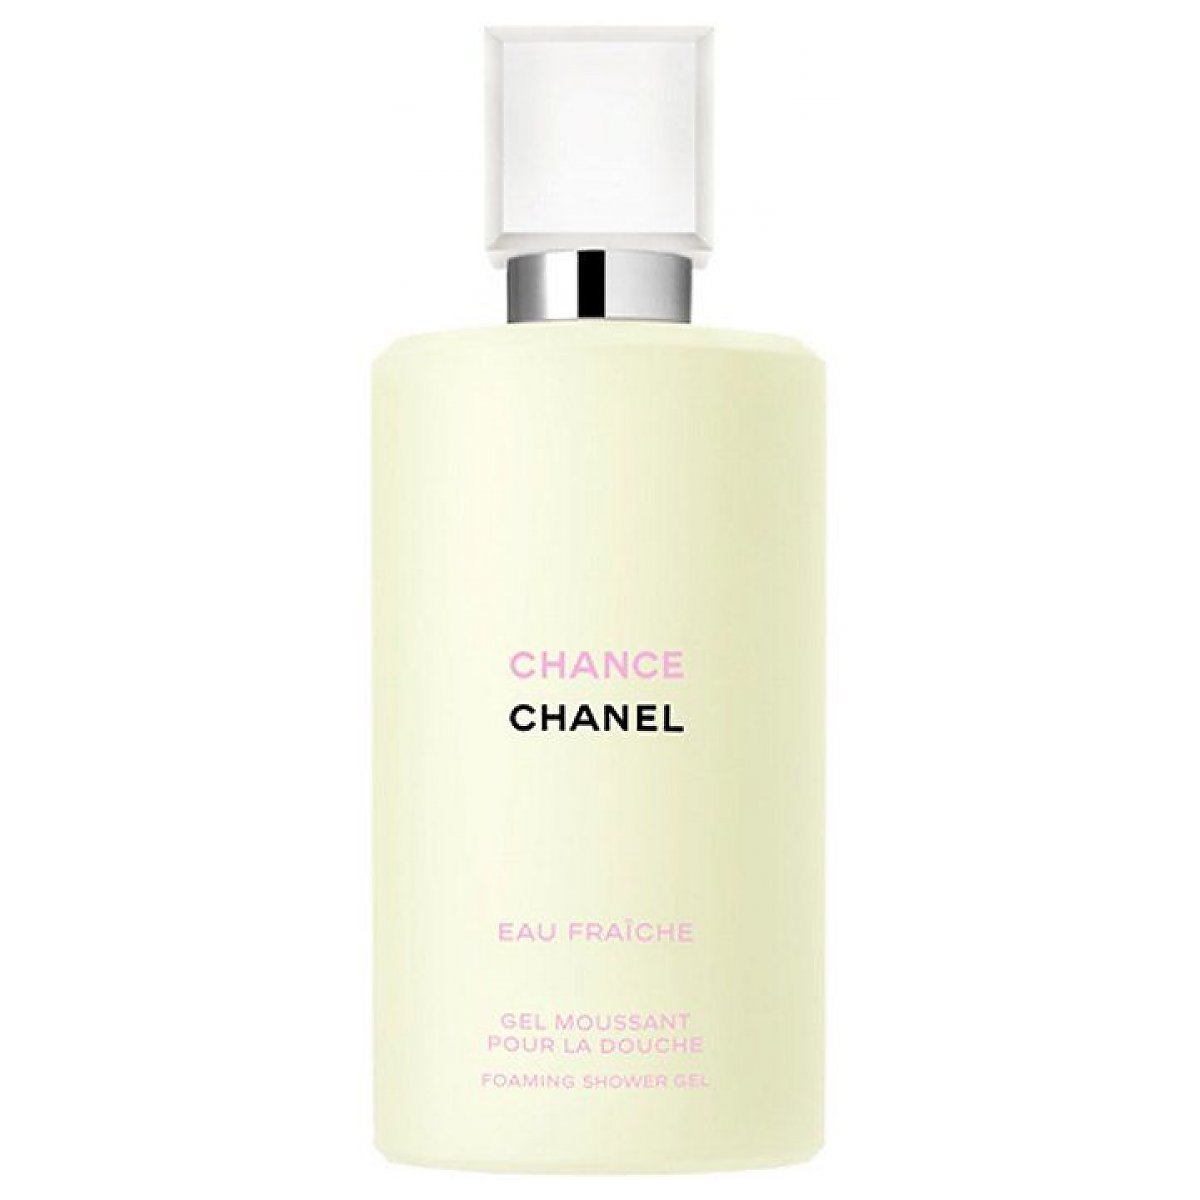 Chance Eau Fraiche Shower Gel for Women 200 ml by Chanel